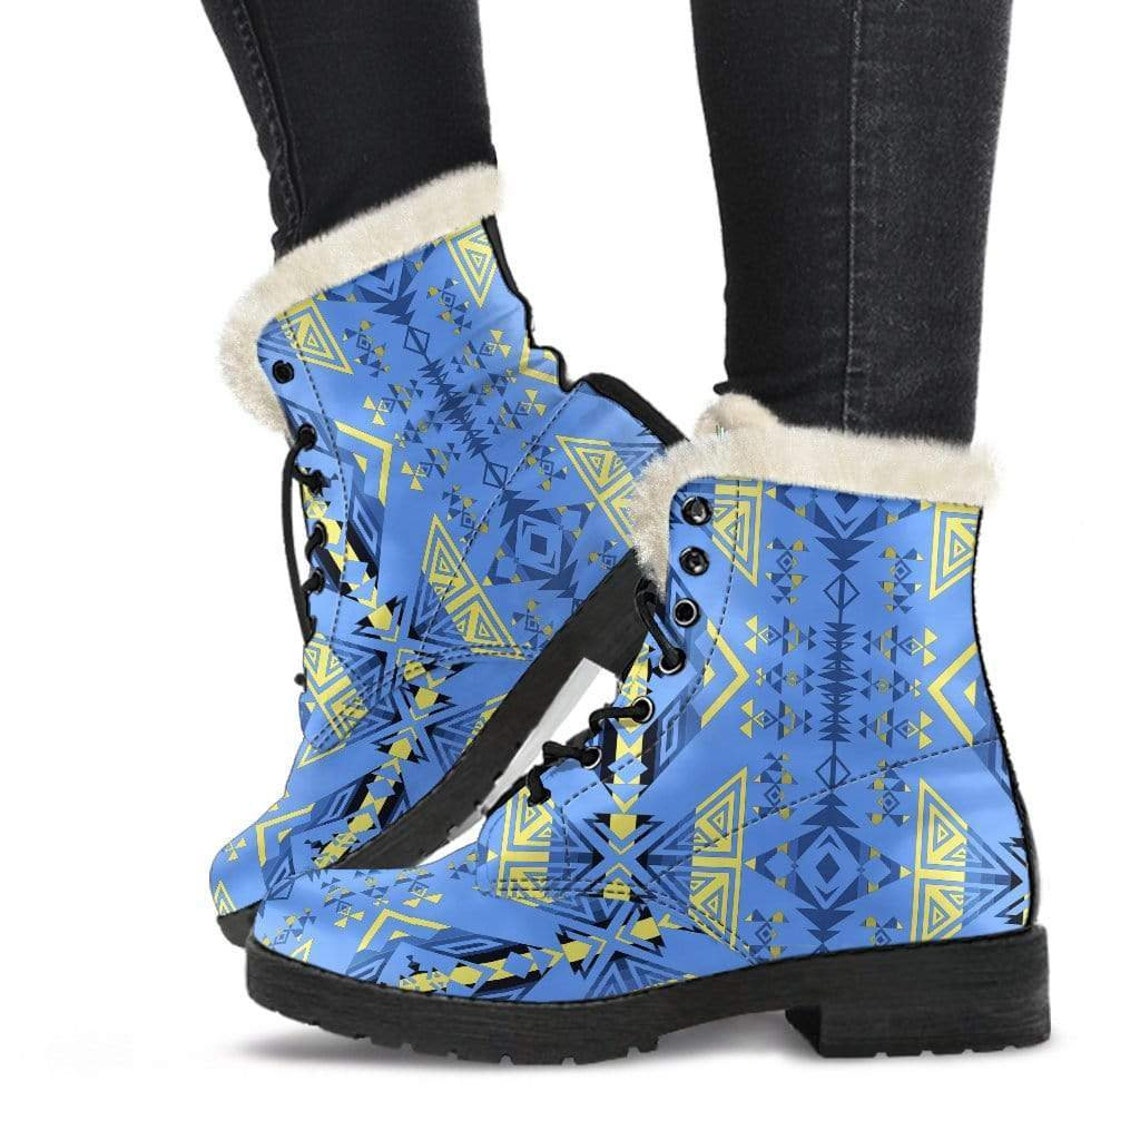 Upstream Expedition Blue Ridge Leather Boot Women Winter | Etsy